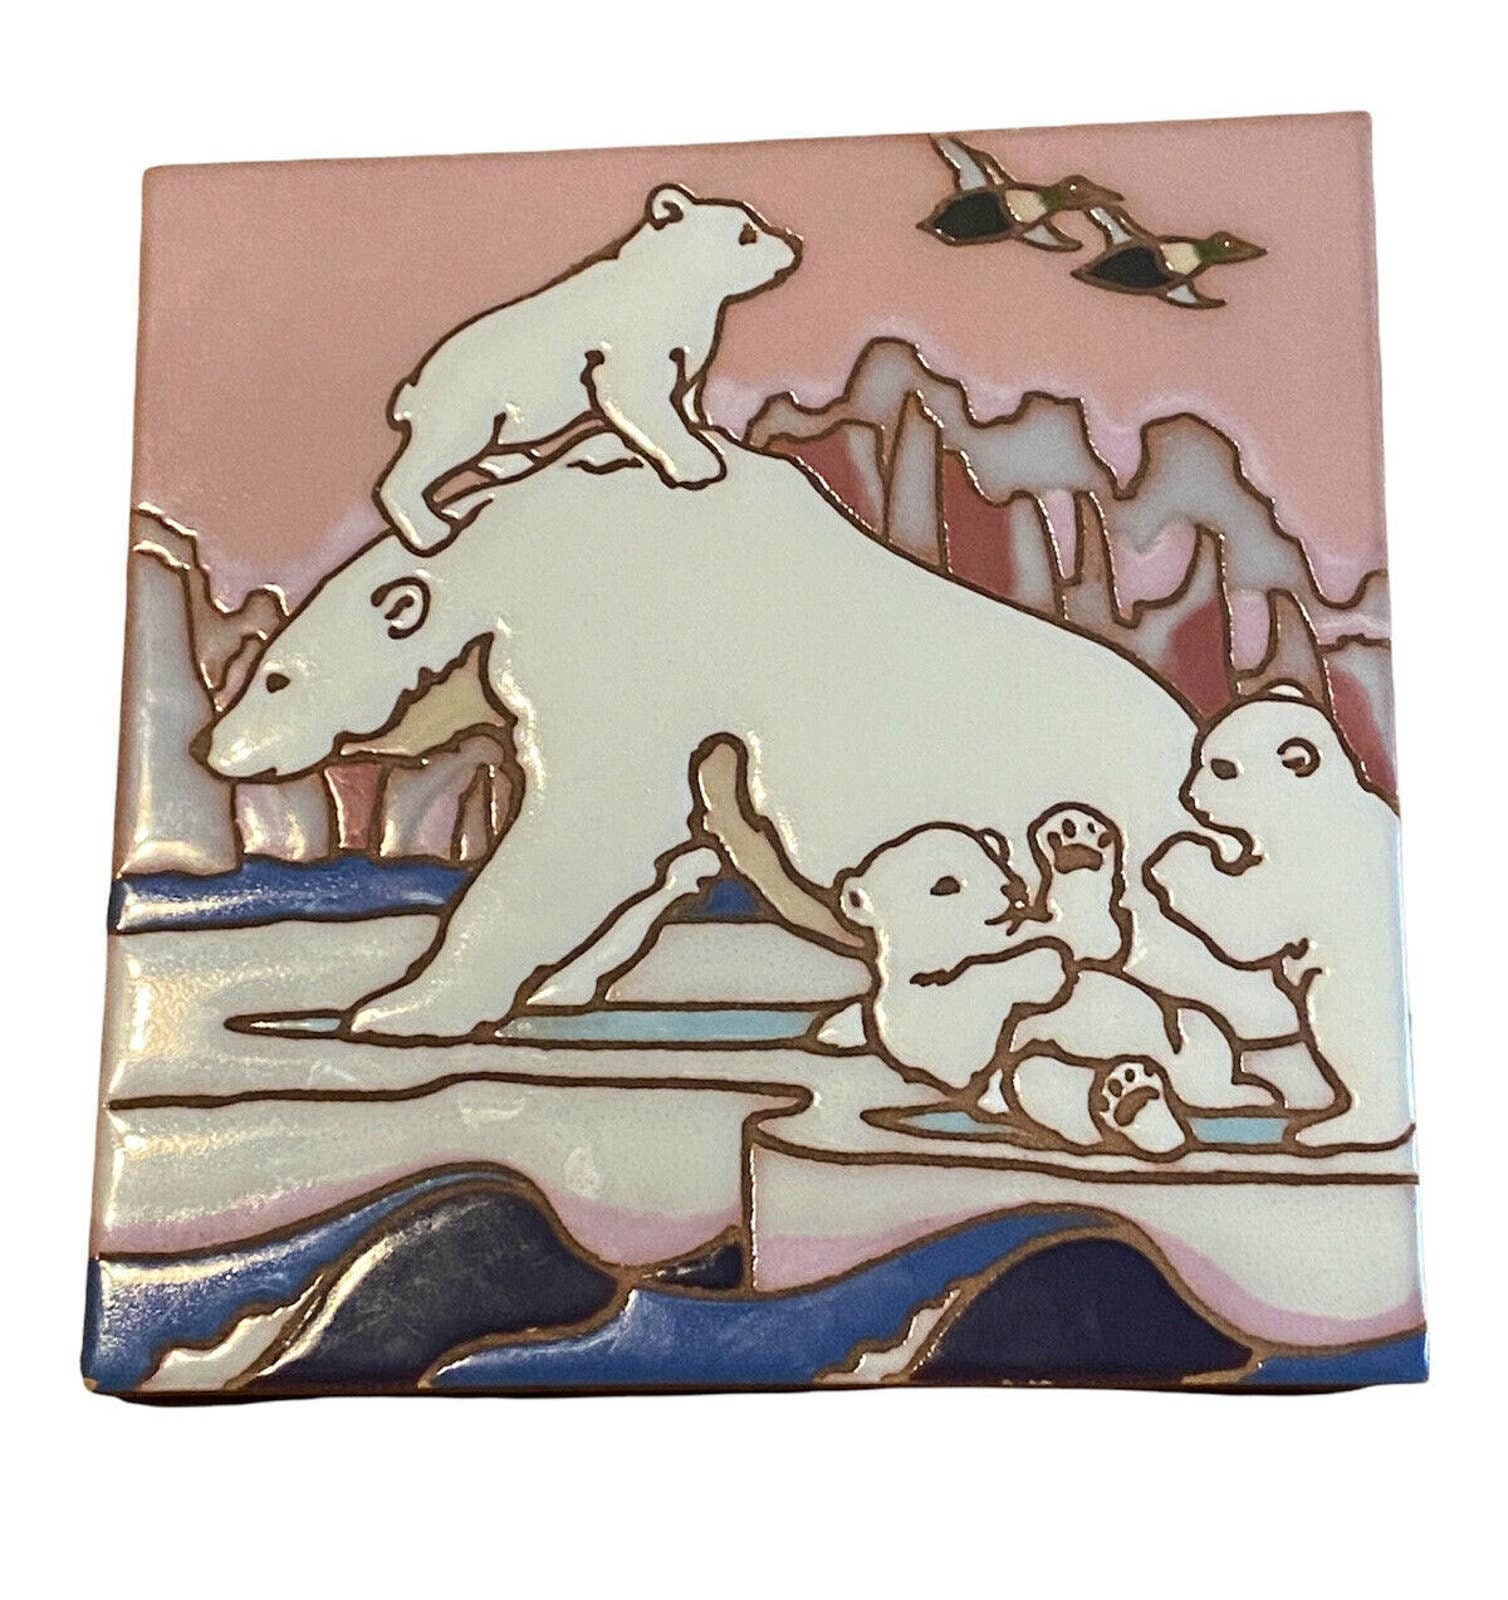 Polar Bear Decorative Ceramic Wall Art Tile 8x8 